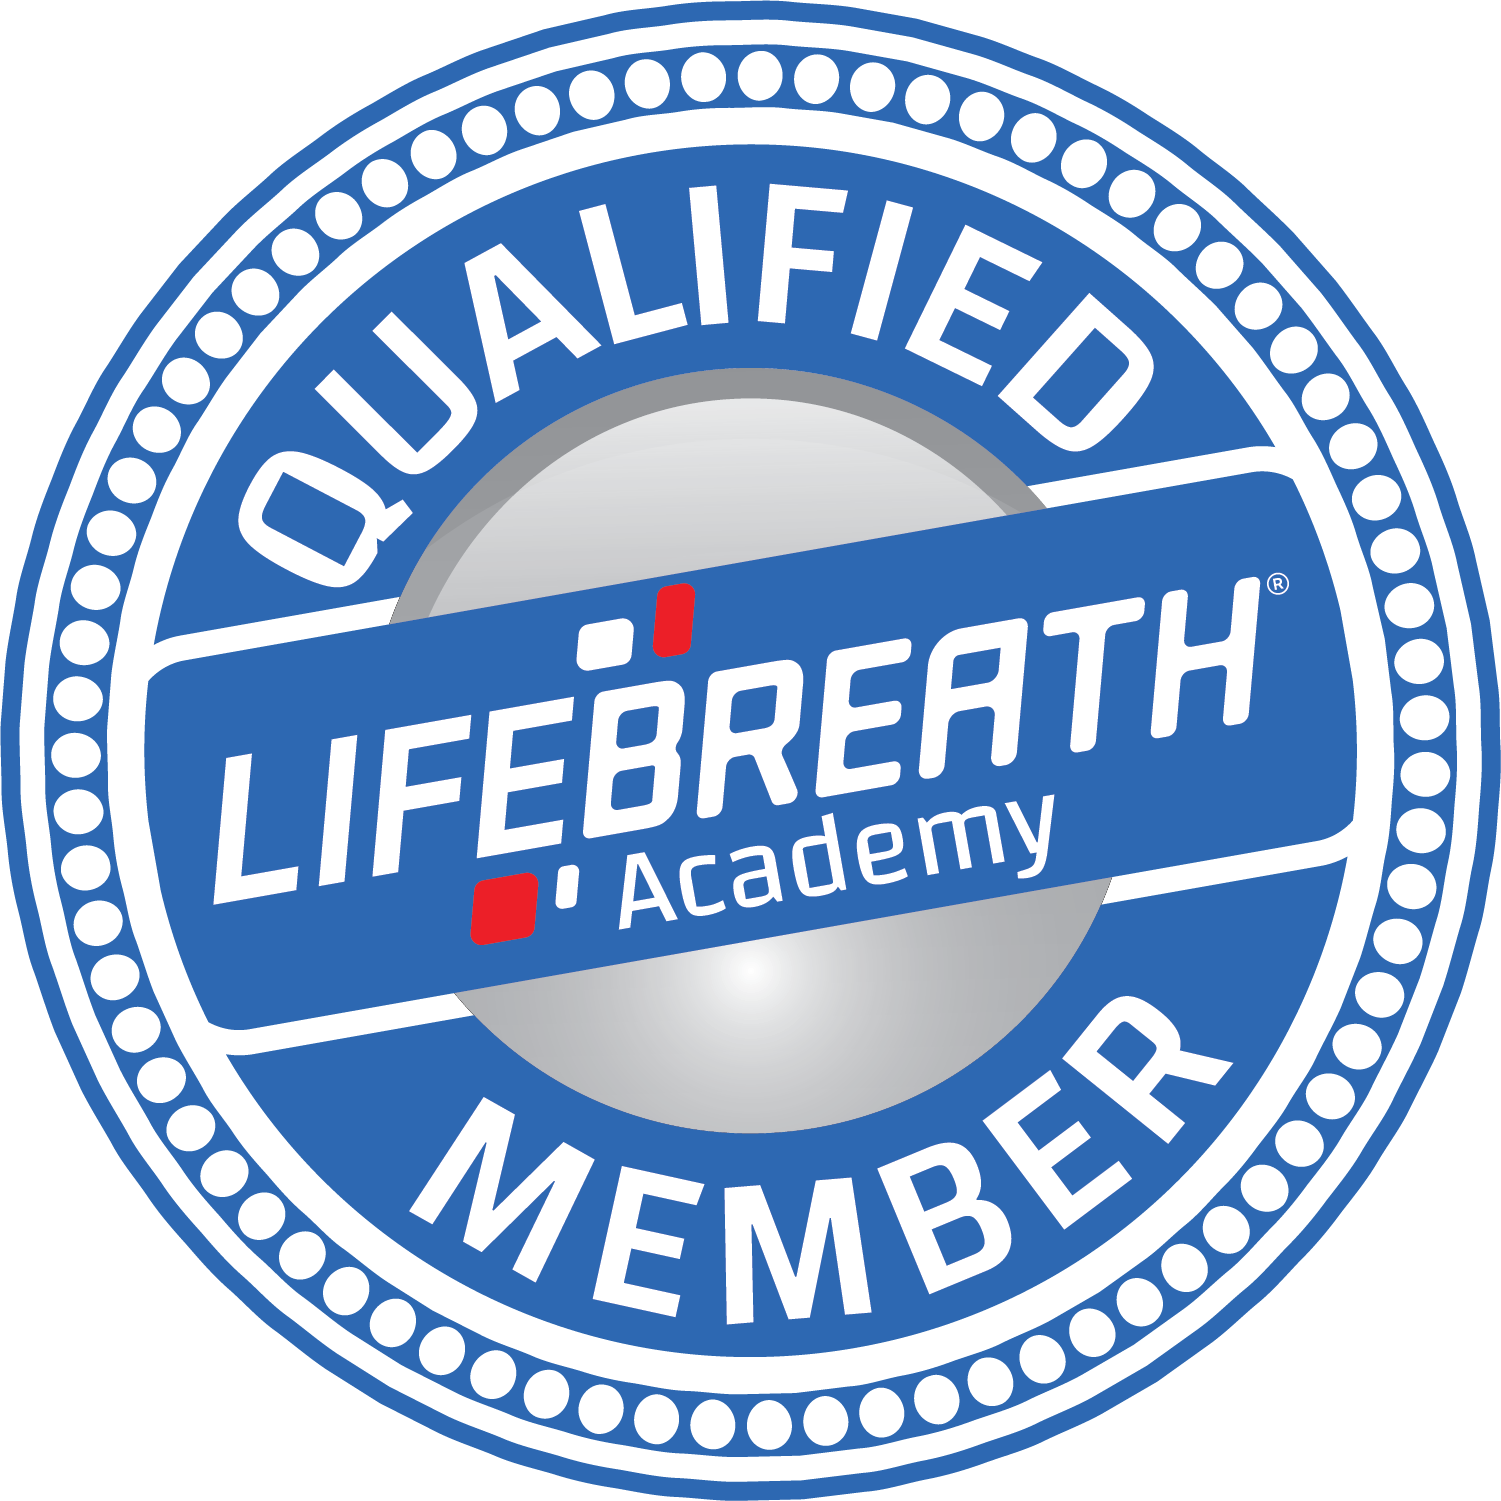 Qualified Lifebreath Member